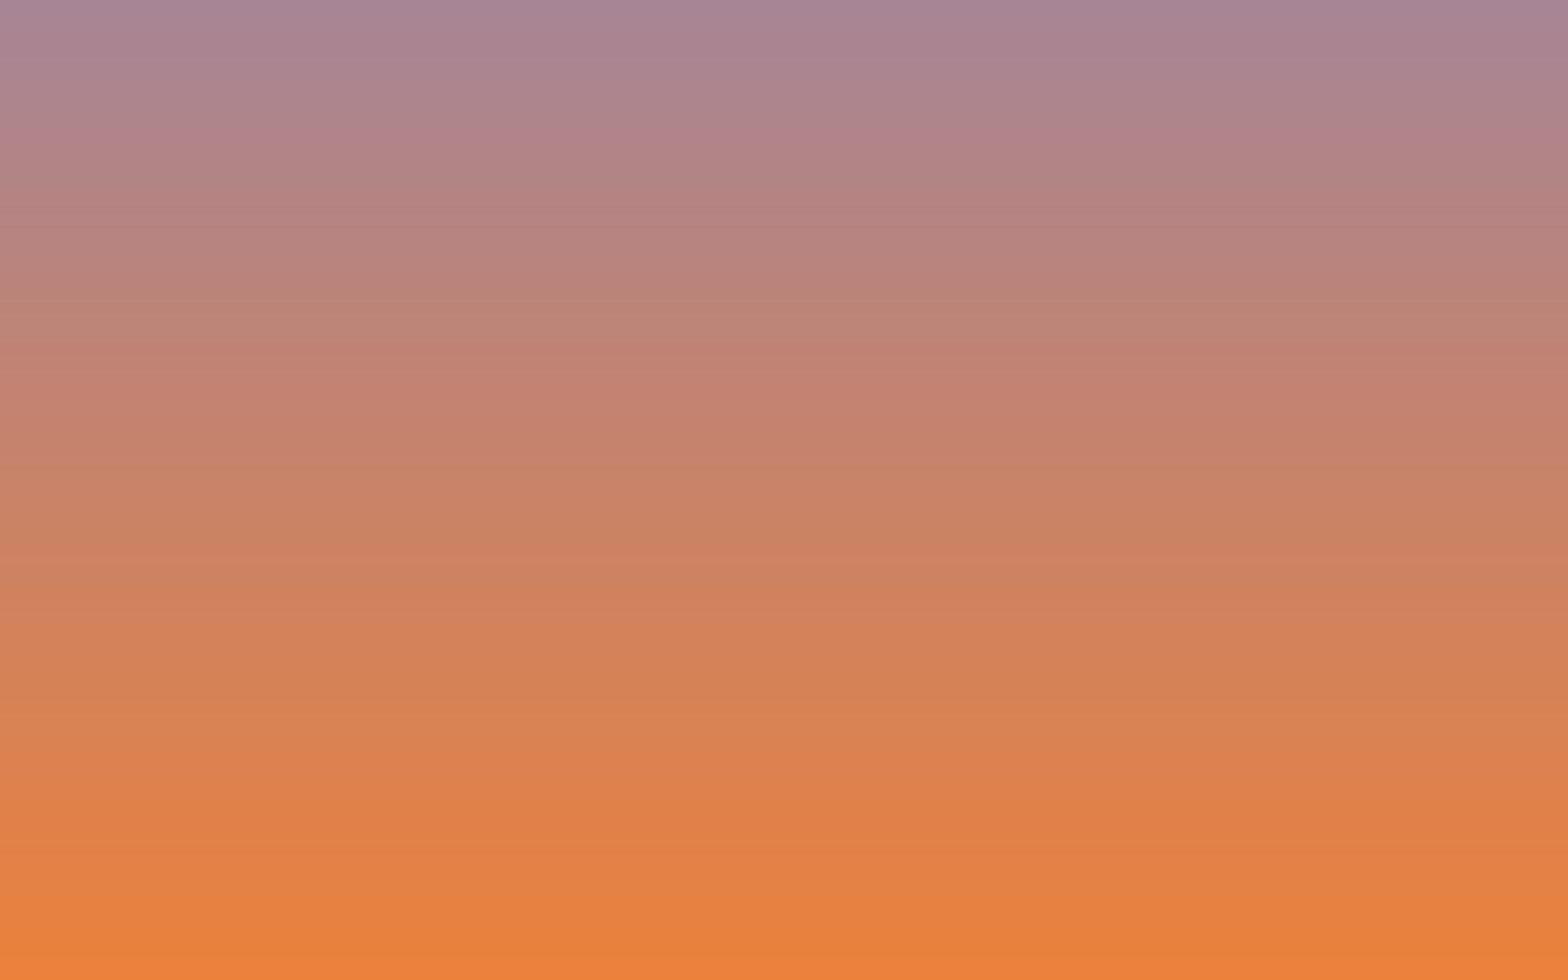 Background sunset illustration with orange and purple colors photo